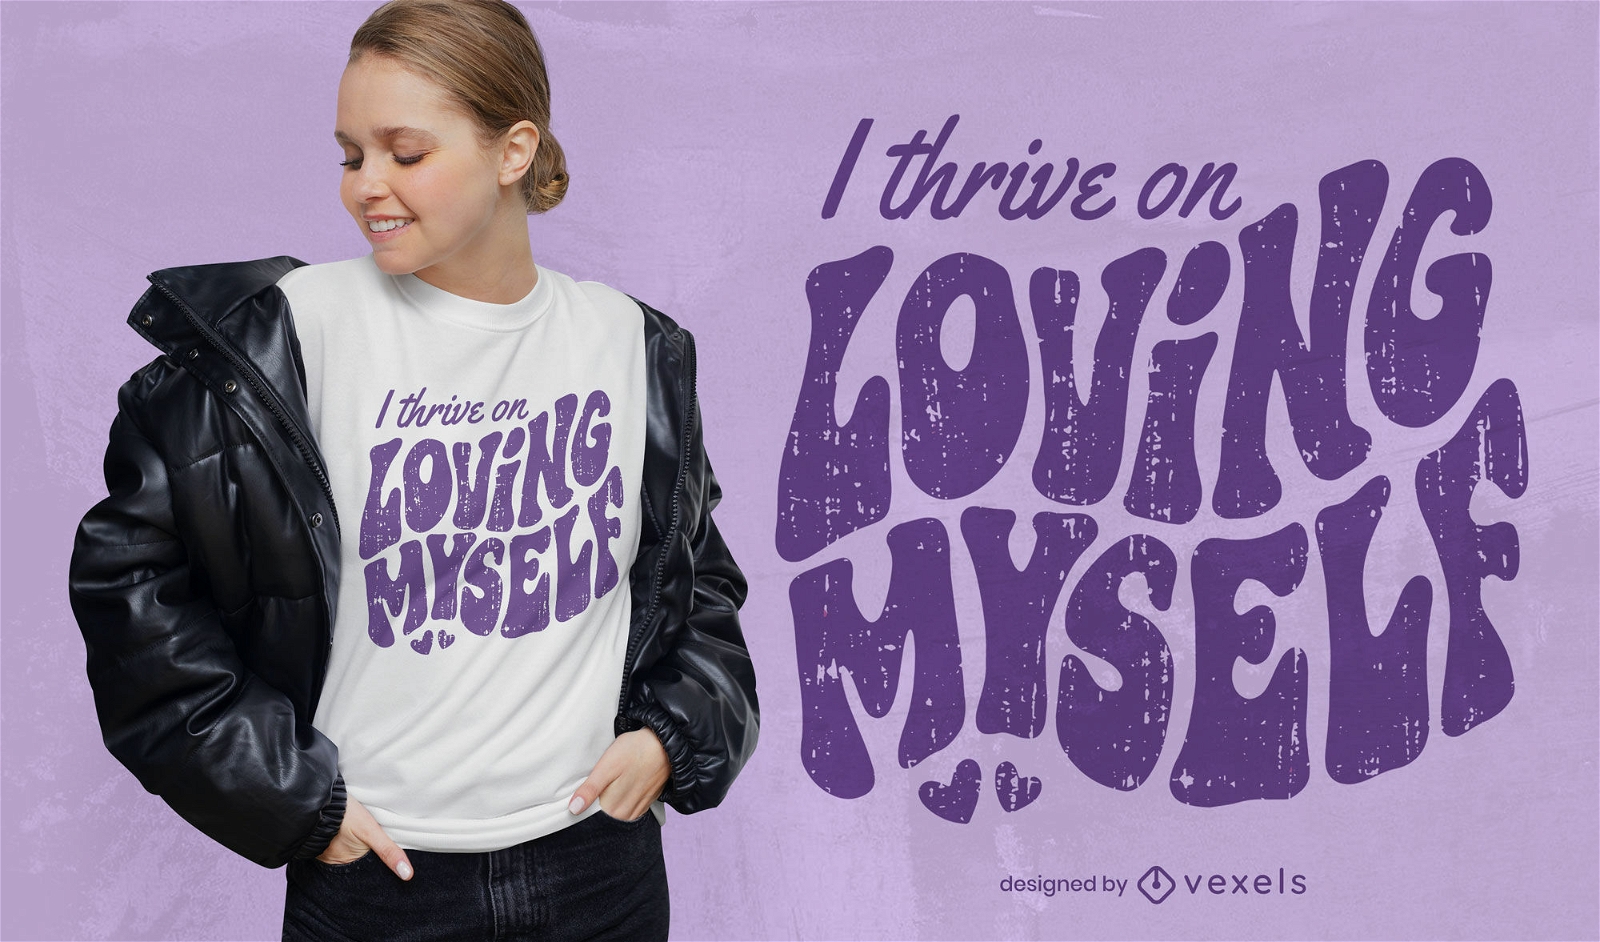 Self love textured quote t-shirt design